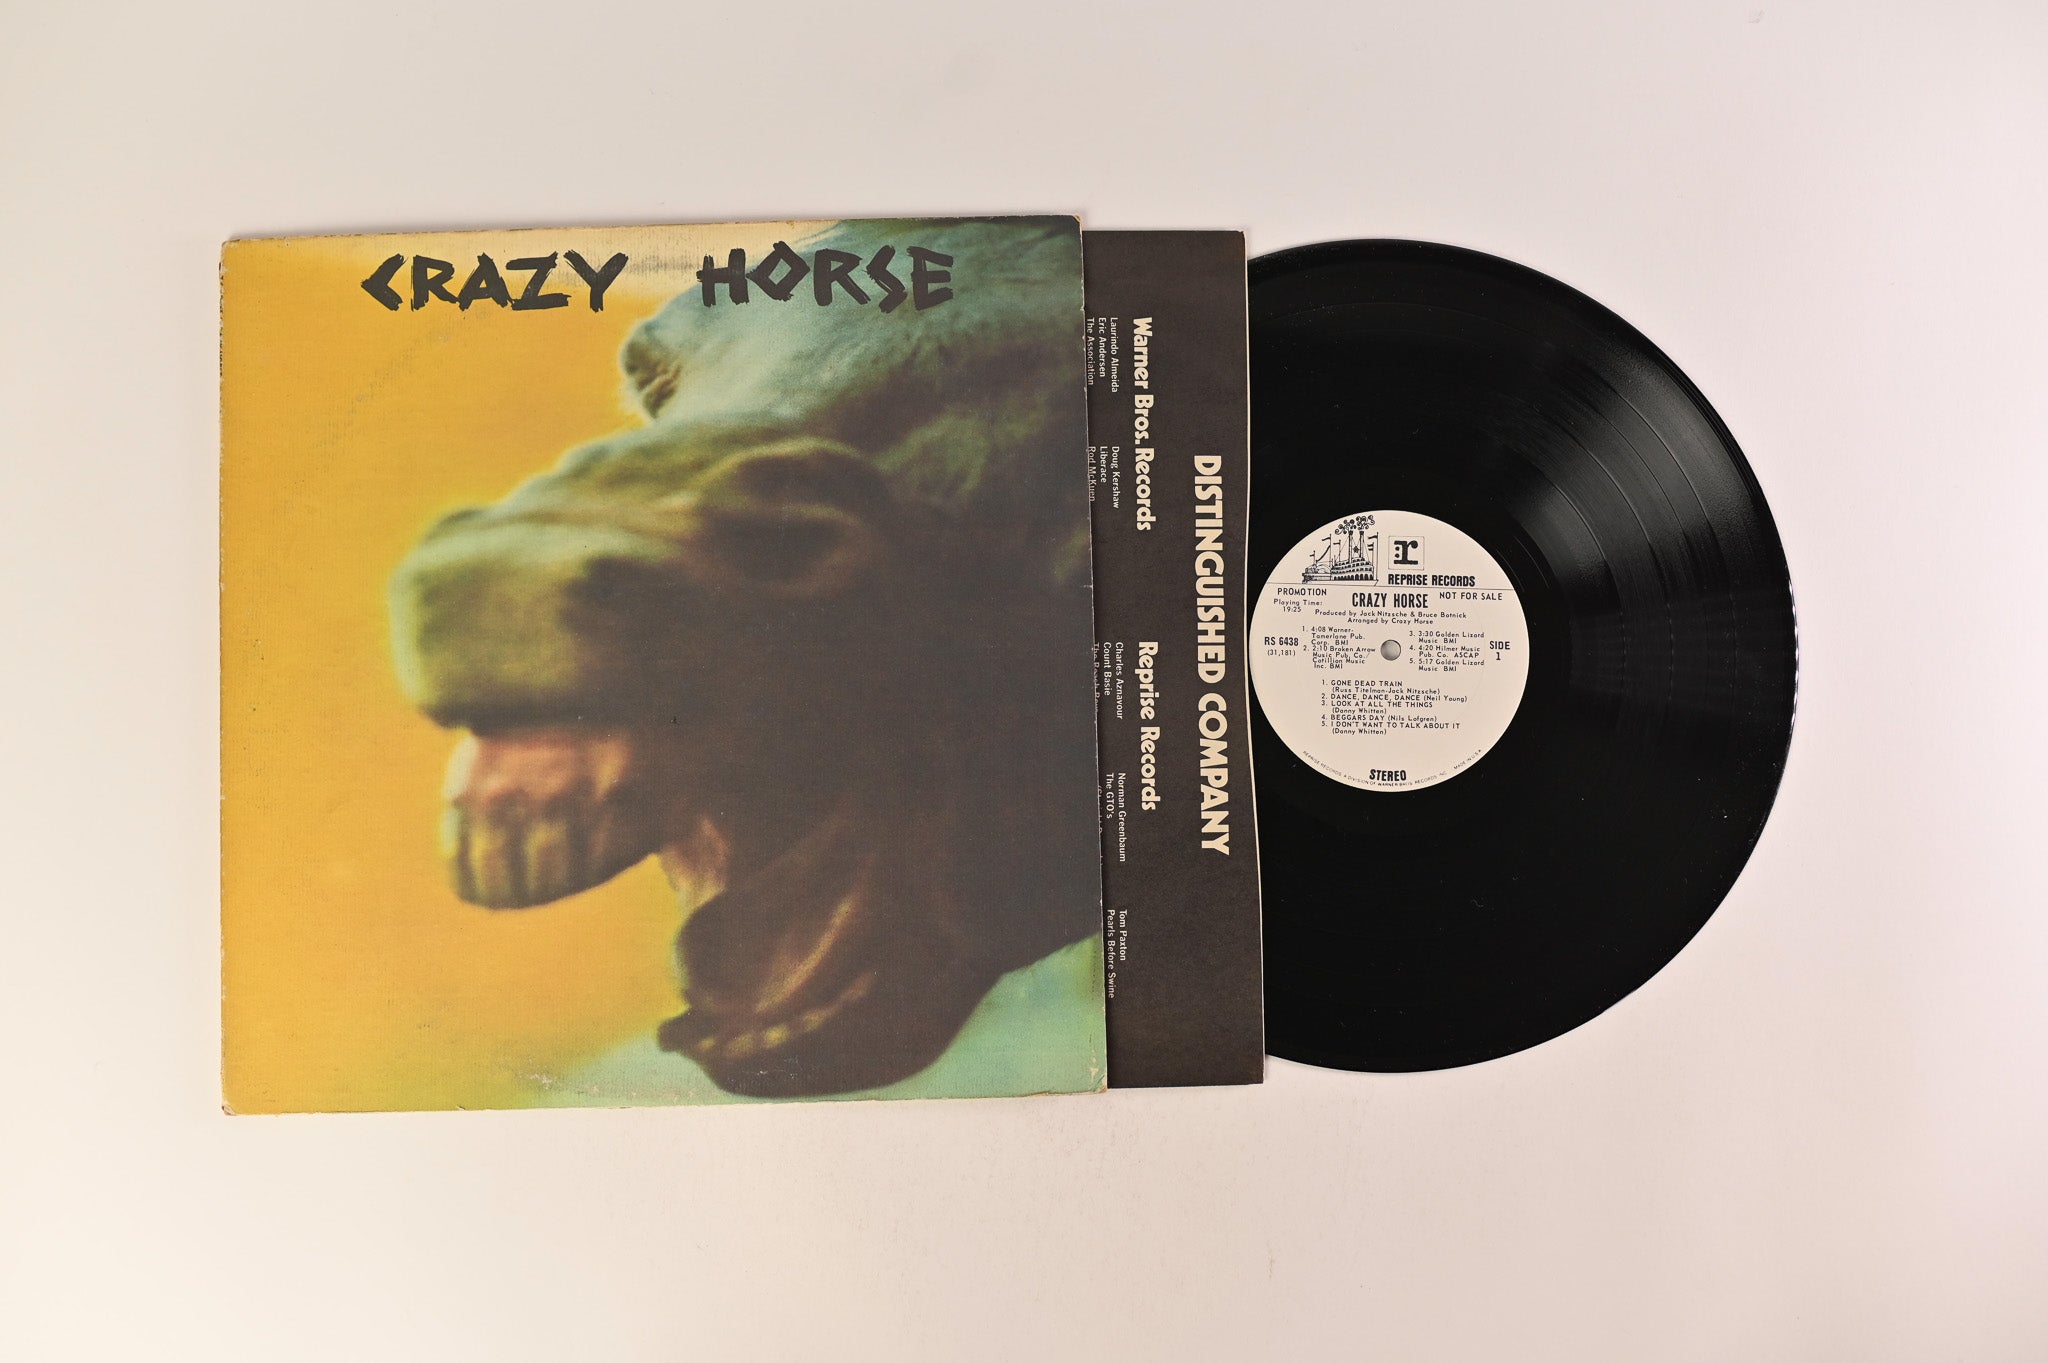 Crazy Horse - Crazy Horse on Reprise Records White Label Promo